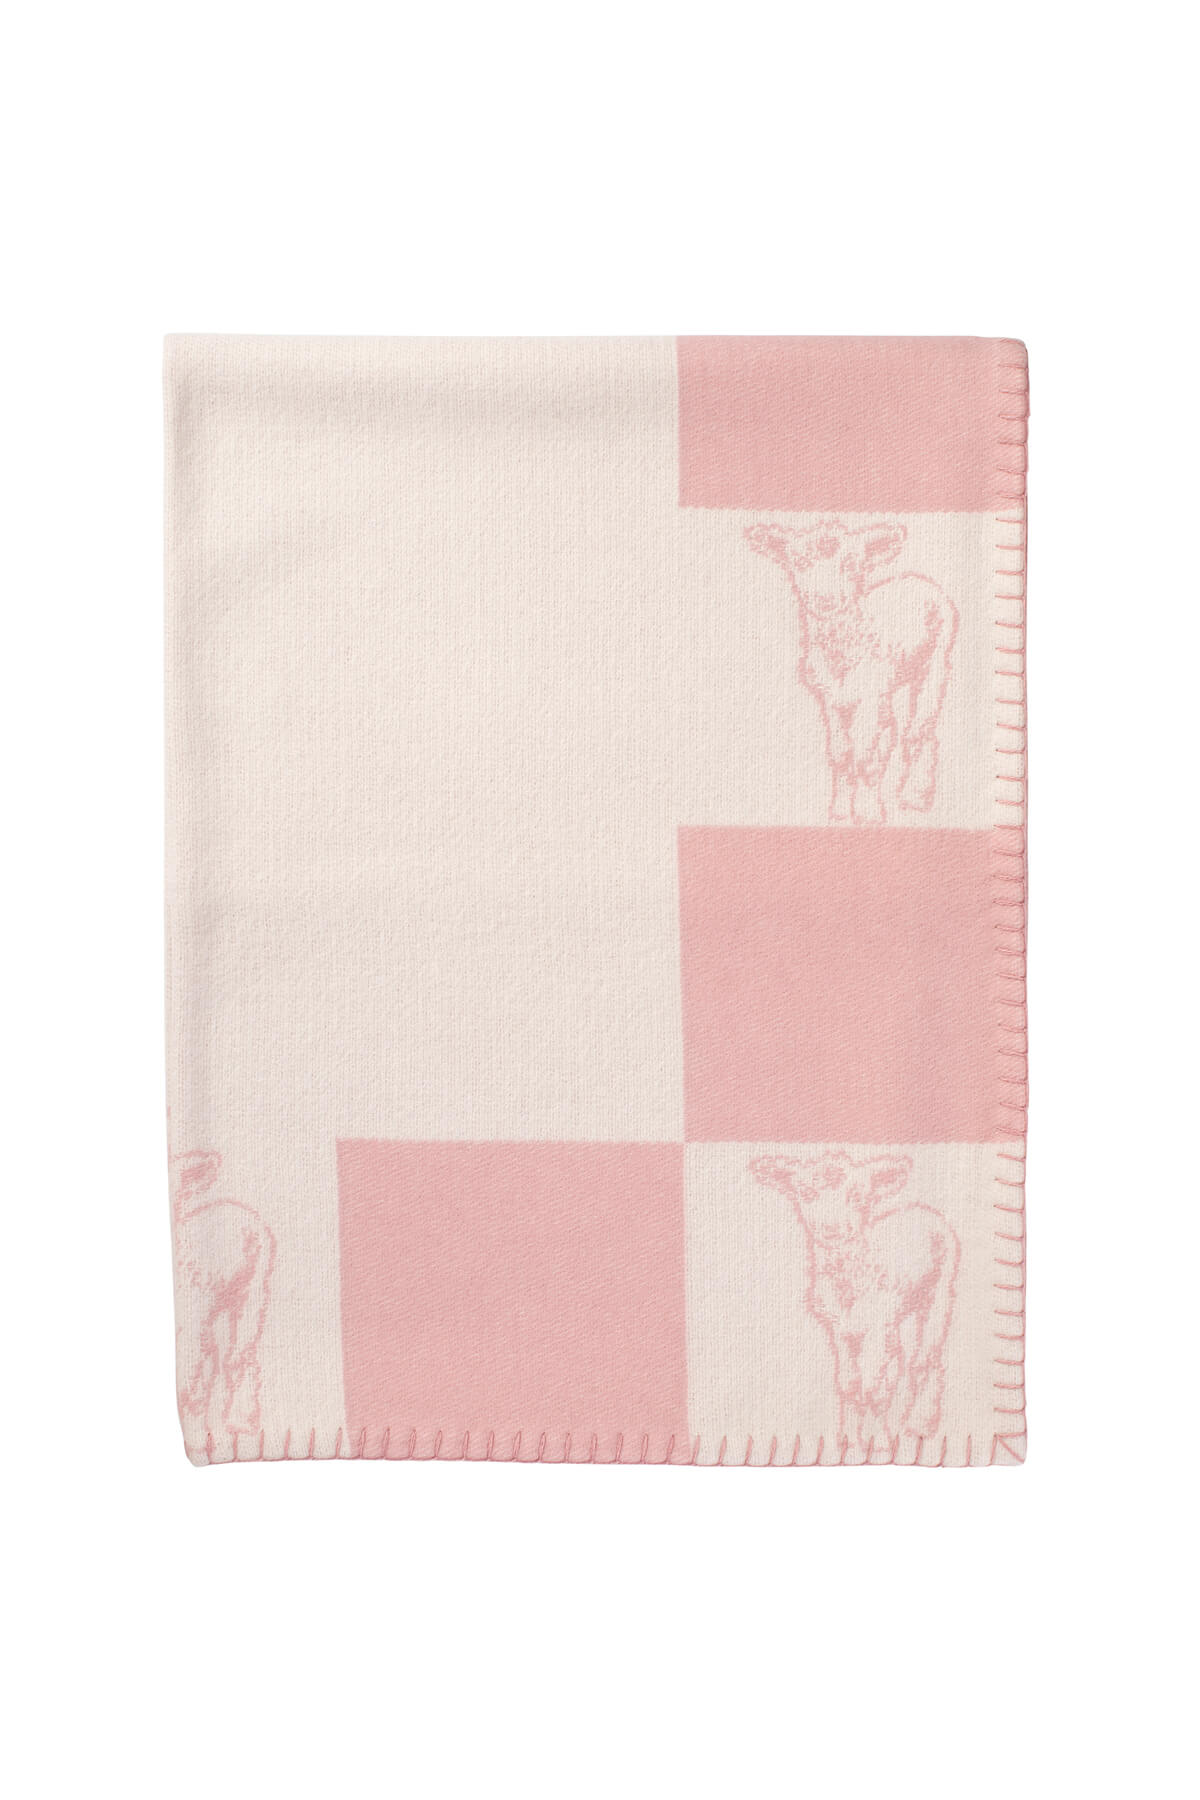 Johnstons of Elgin Merino Wool Baby Blanket in Pink on white background TB000515AU6598ONE